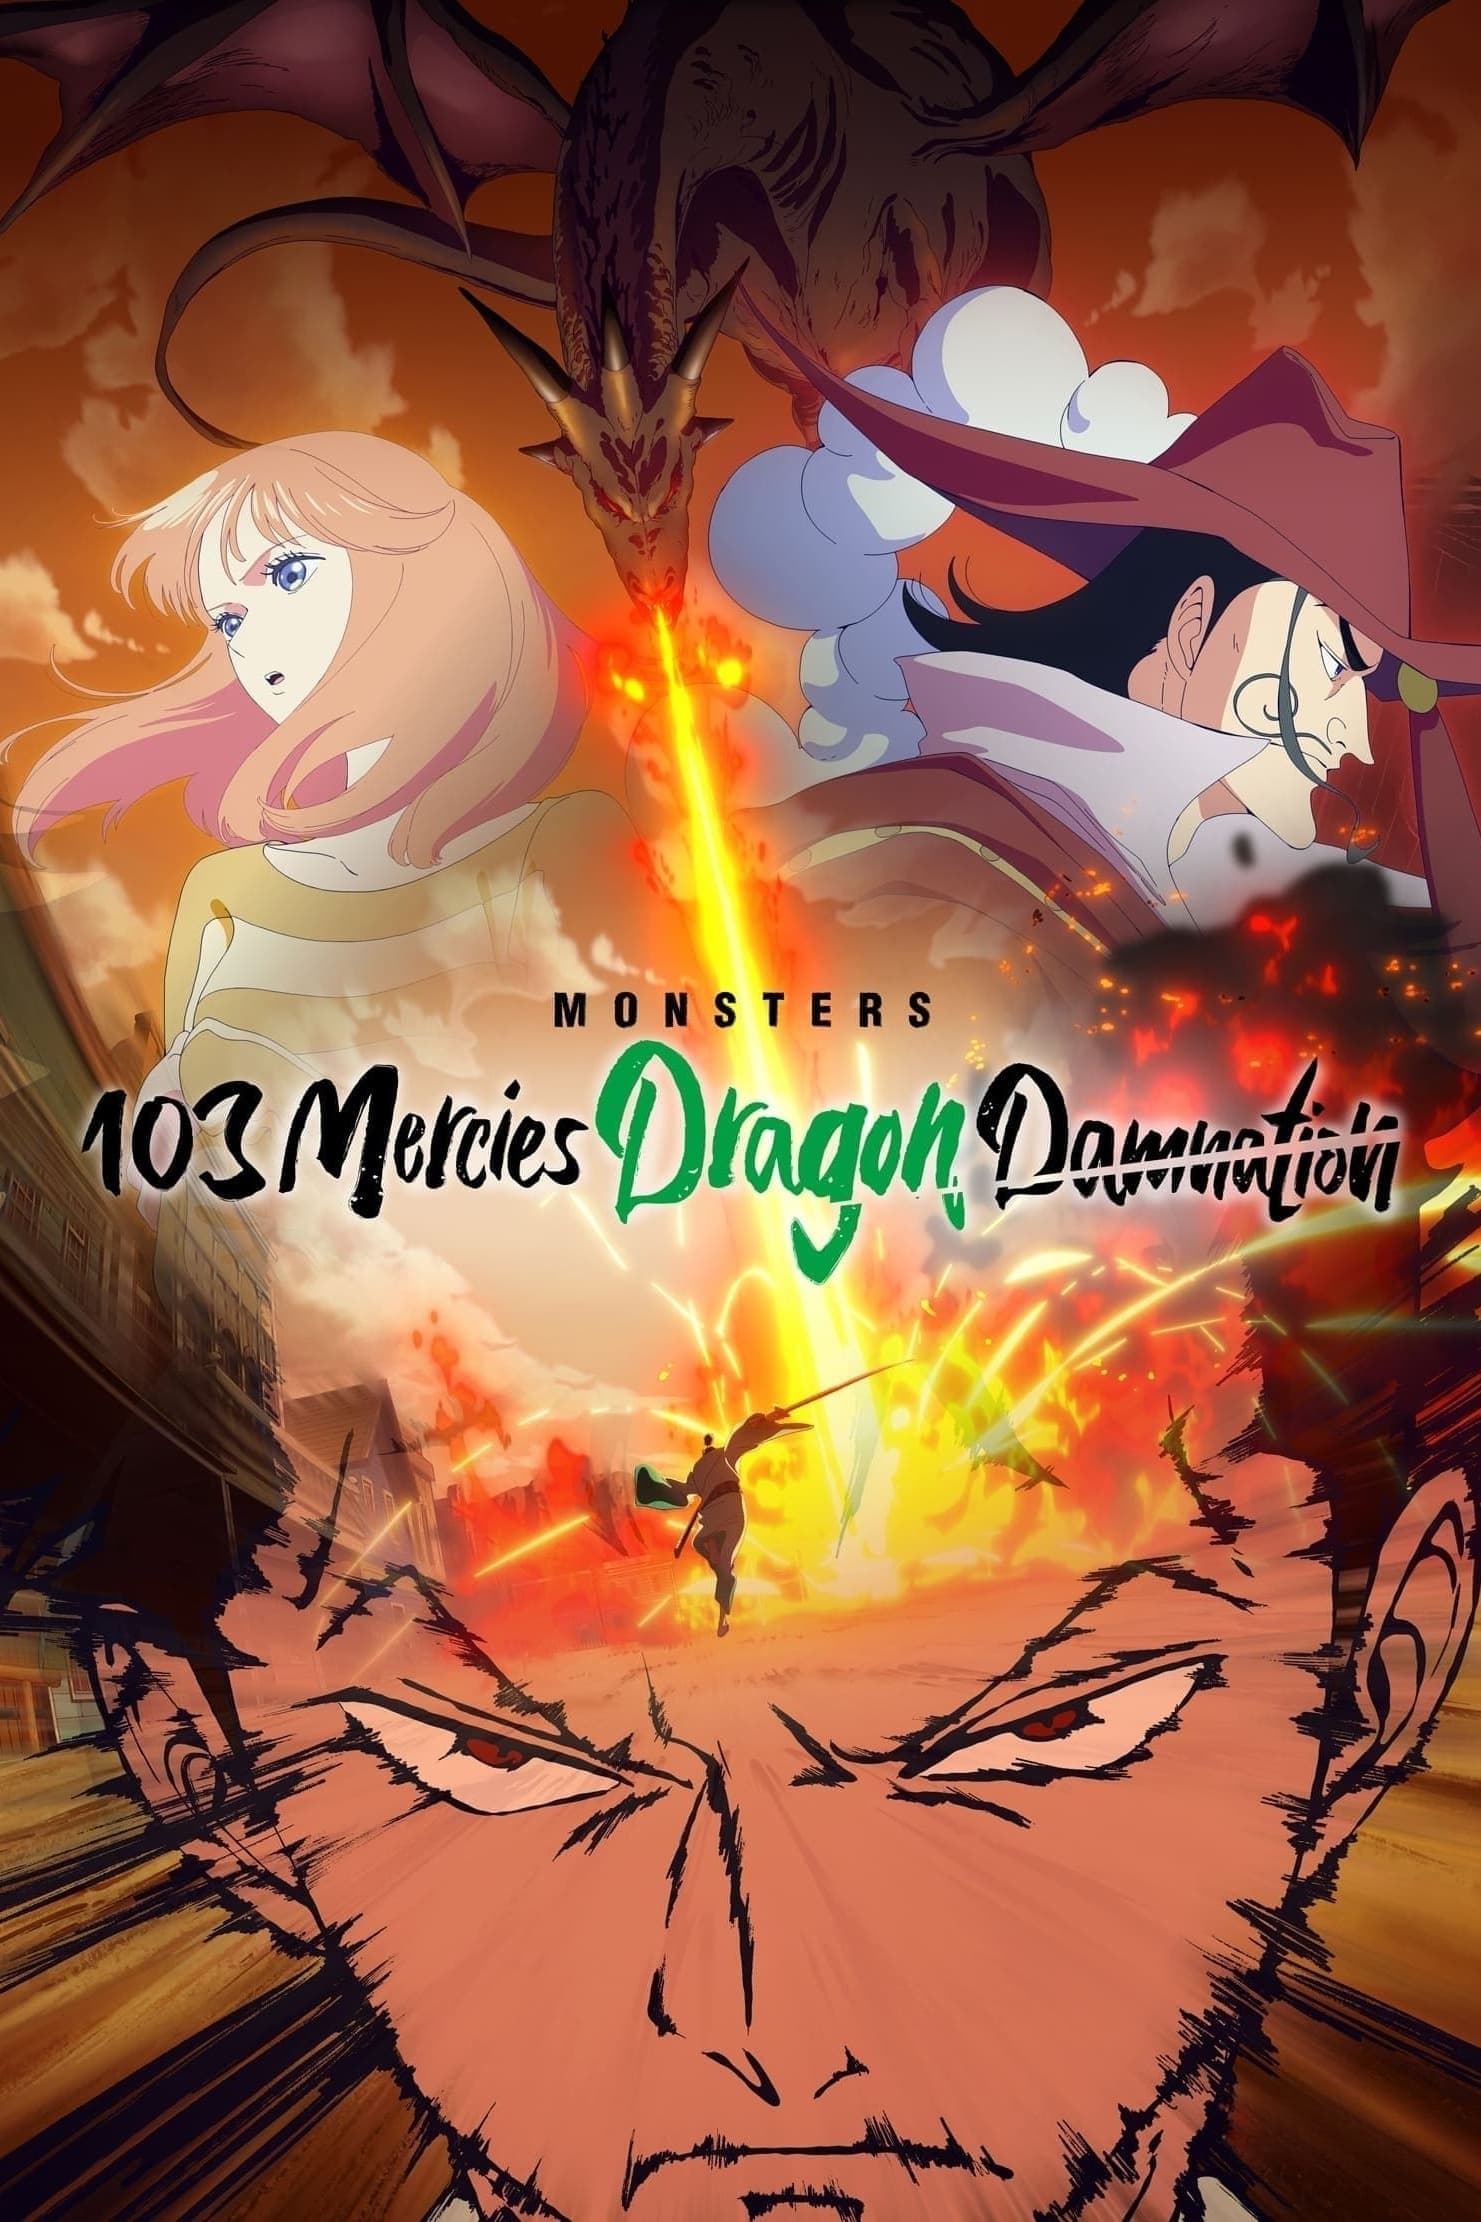 هیولا ها  103 لعنت به رحمت اژدها (Monsters: 103 Mercies Dragon Damnation)